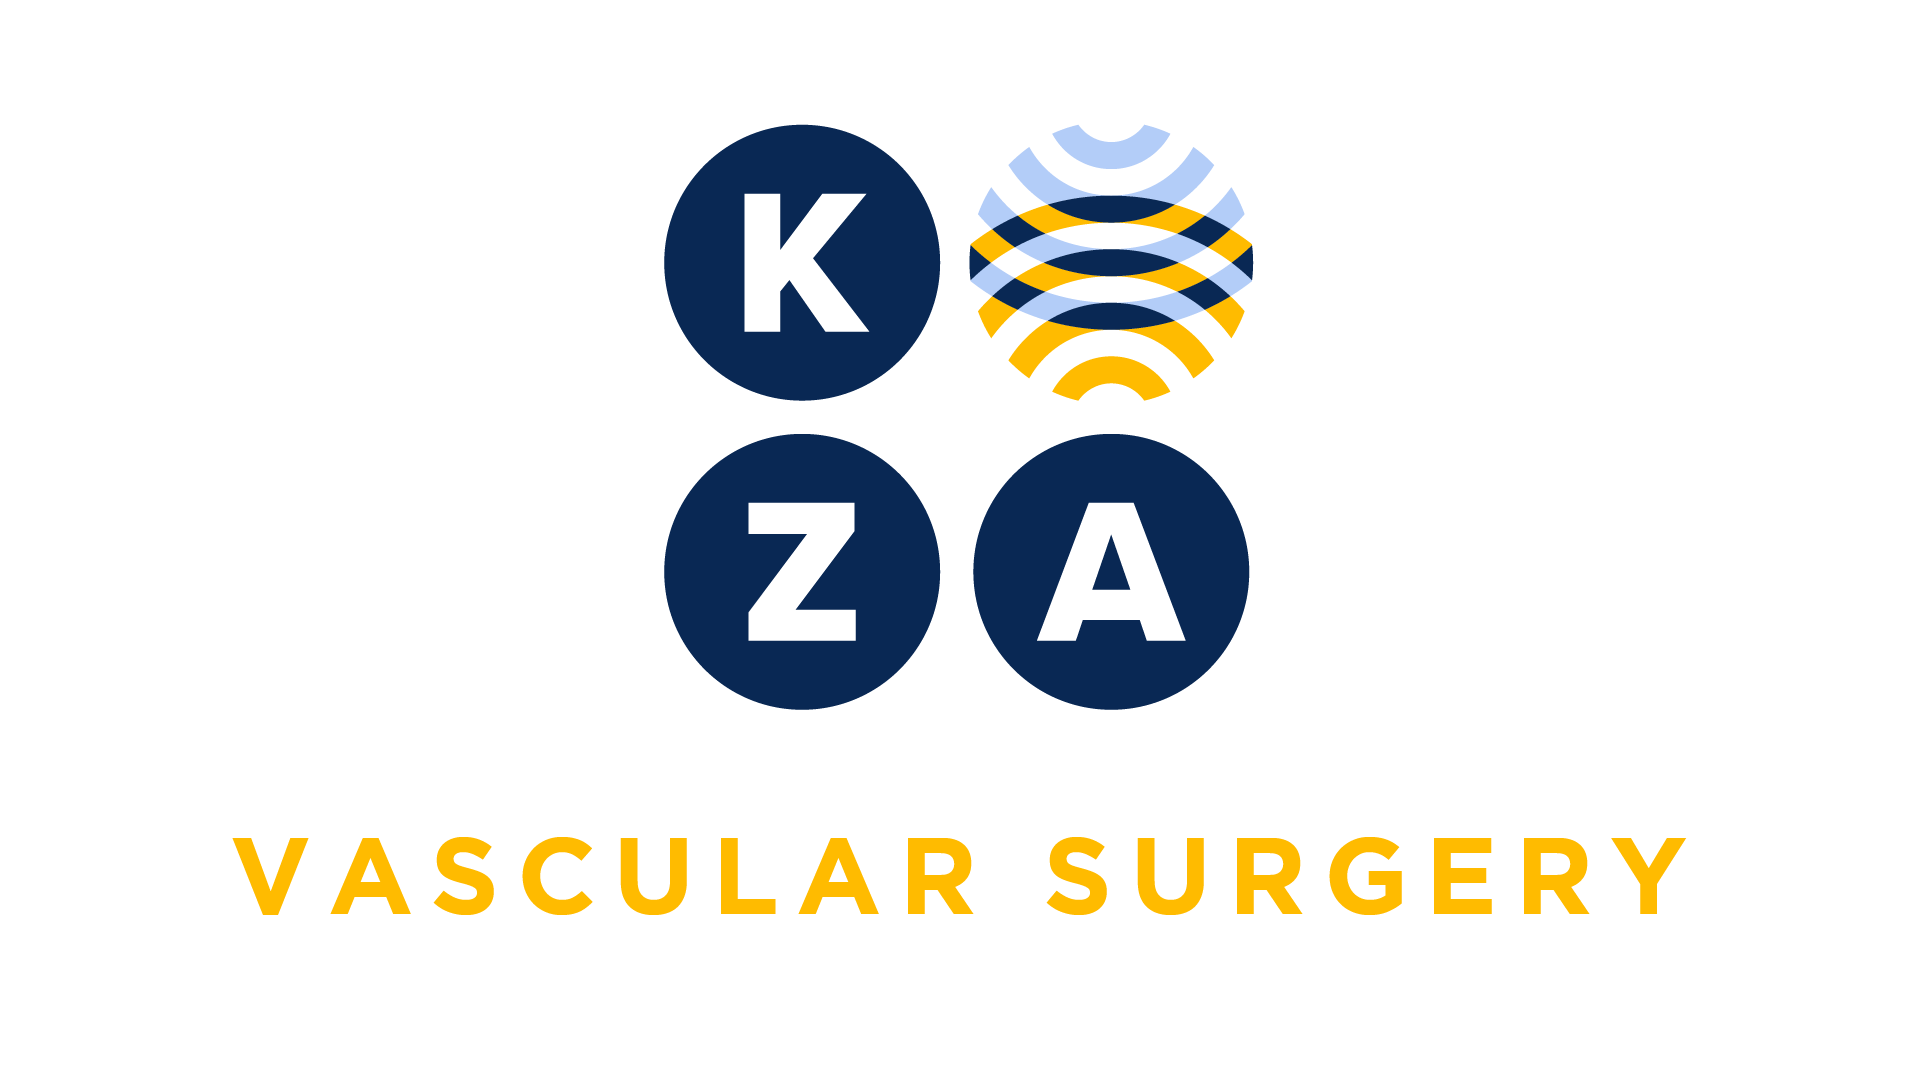 KZA - Vascular Surgery - Coding Coach